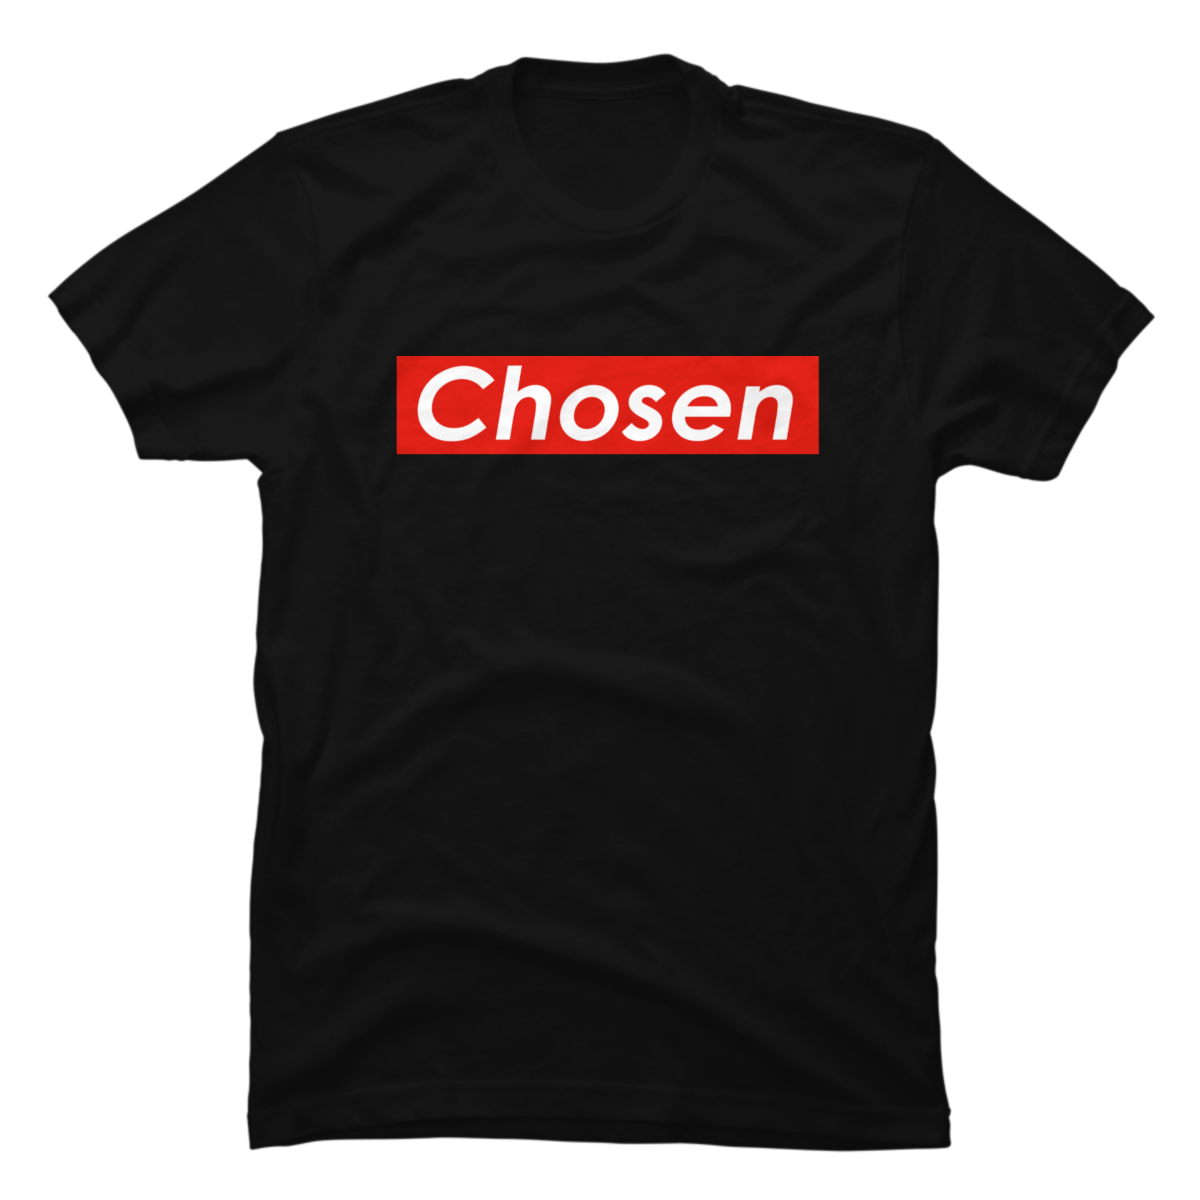 the chosen tee shirts